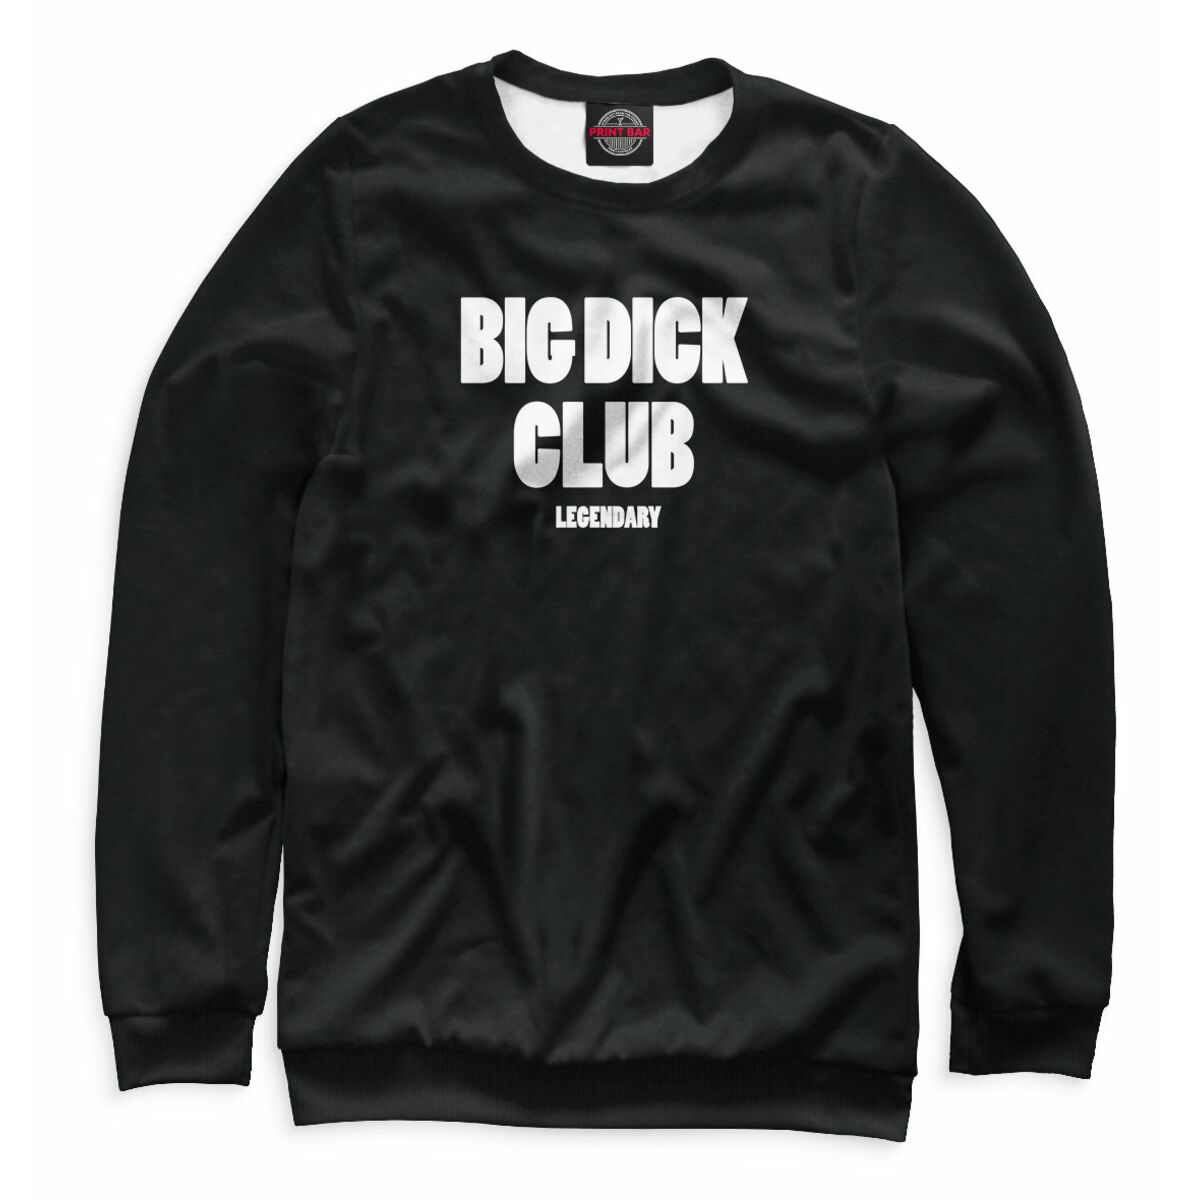 Cocks club. Big dick Club худи. Толстовки блоггеров. Футболка big dick Club Legendary.